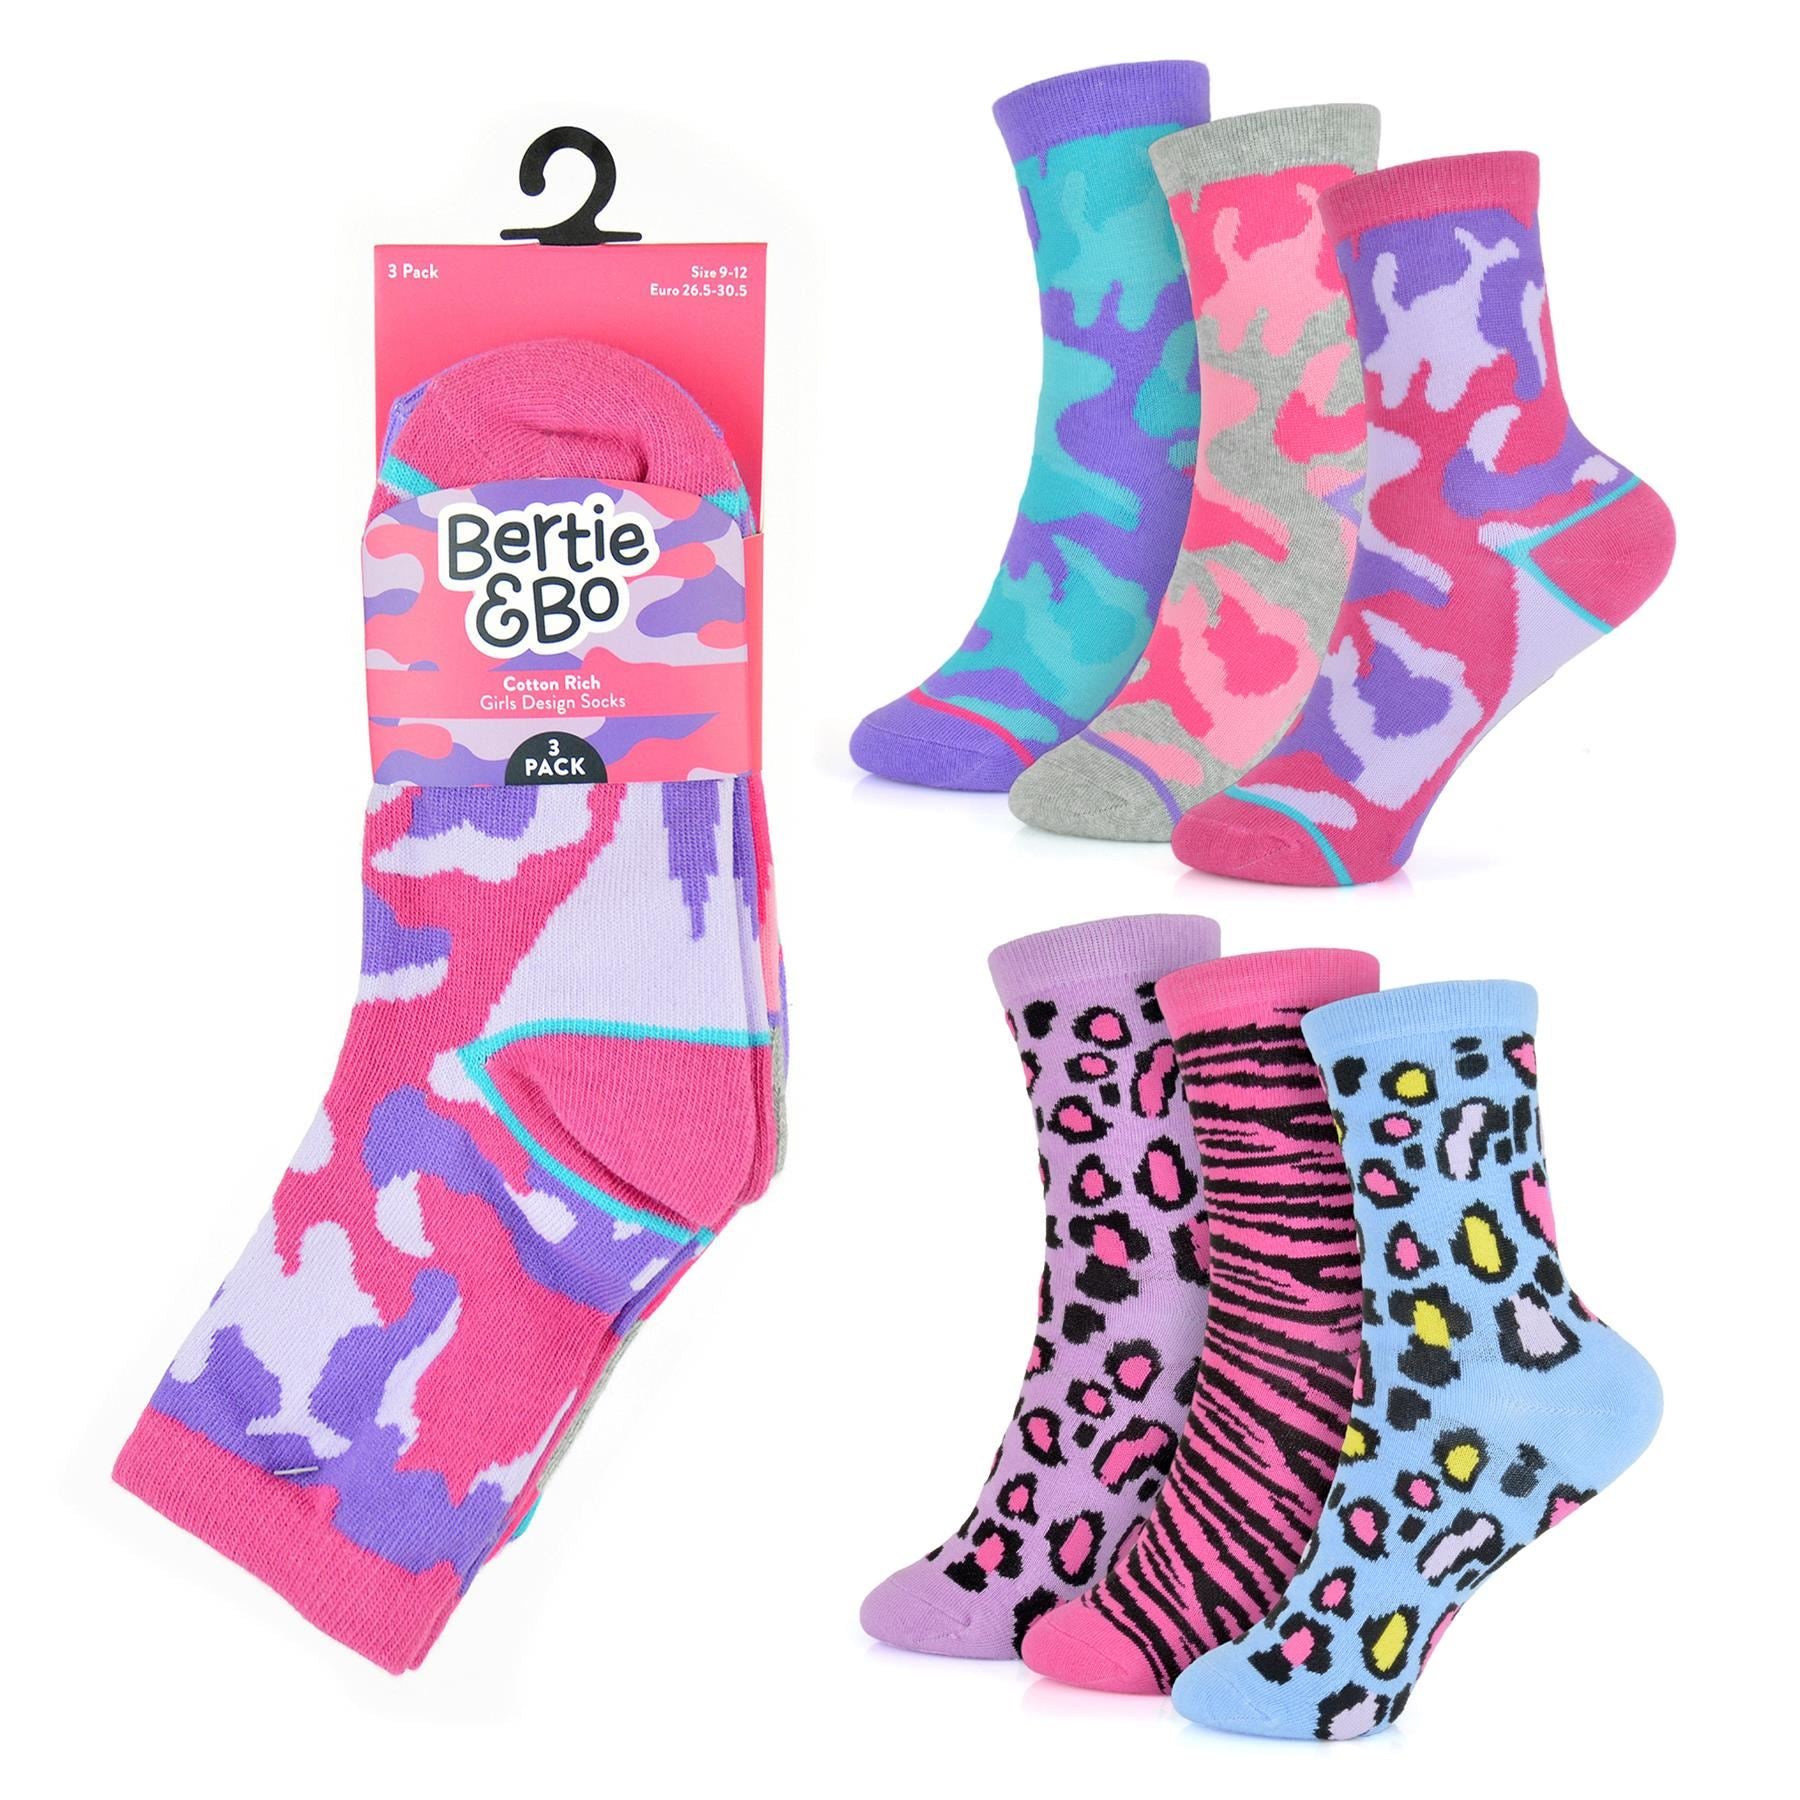 Kids Girls Camouflage & Animal Print Socks Pack of 3 Kids Cotton Rich Socks